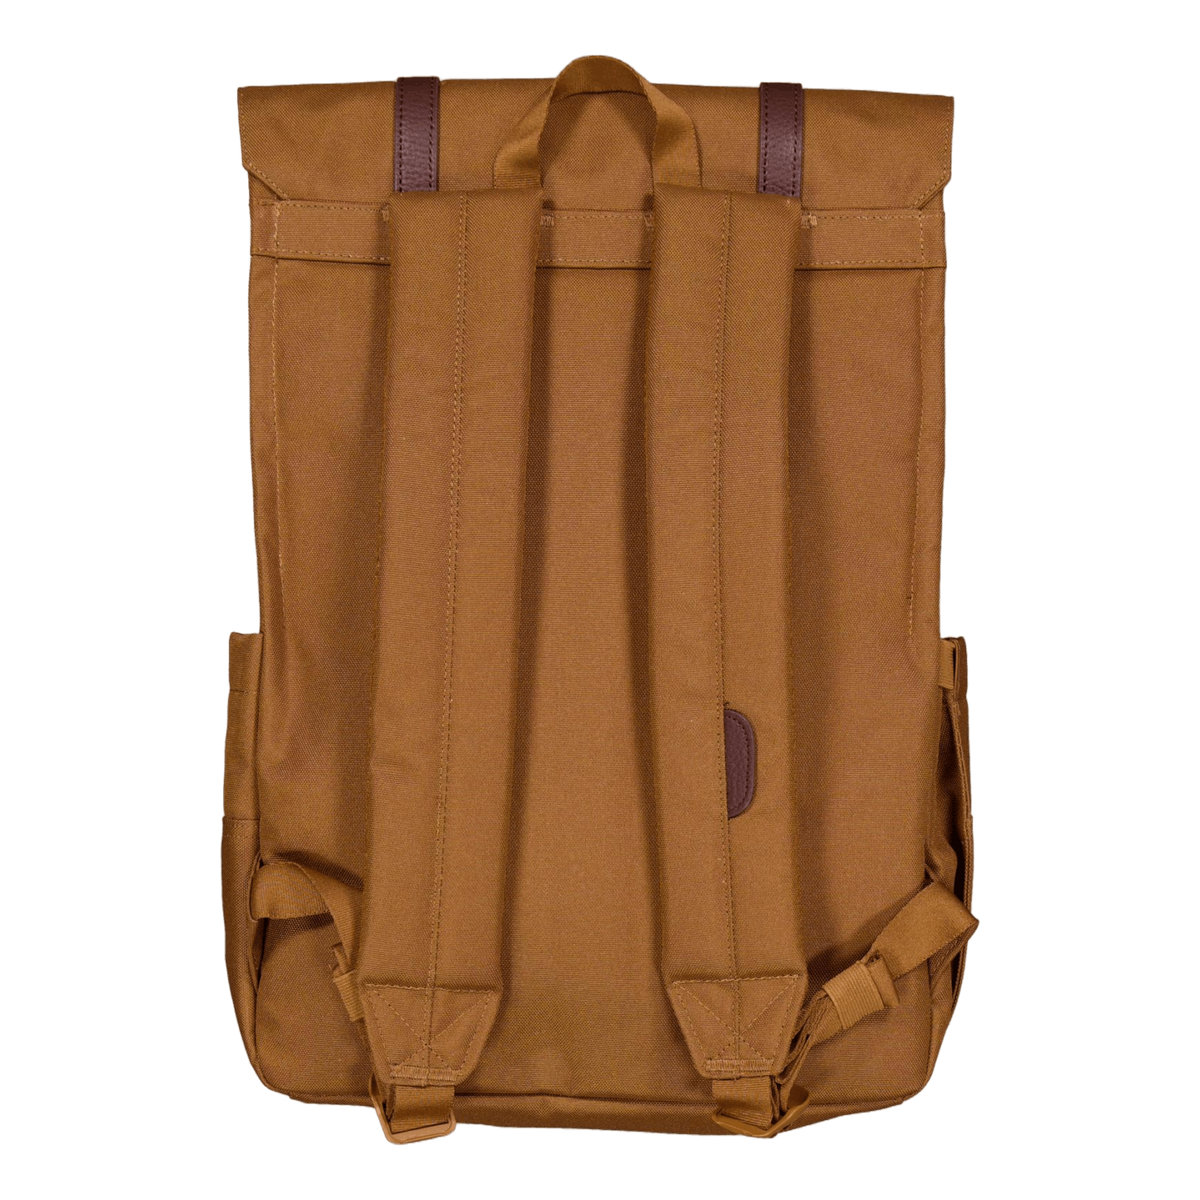 Herschel Survey™ Backpack Rubber